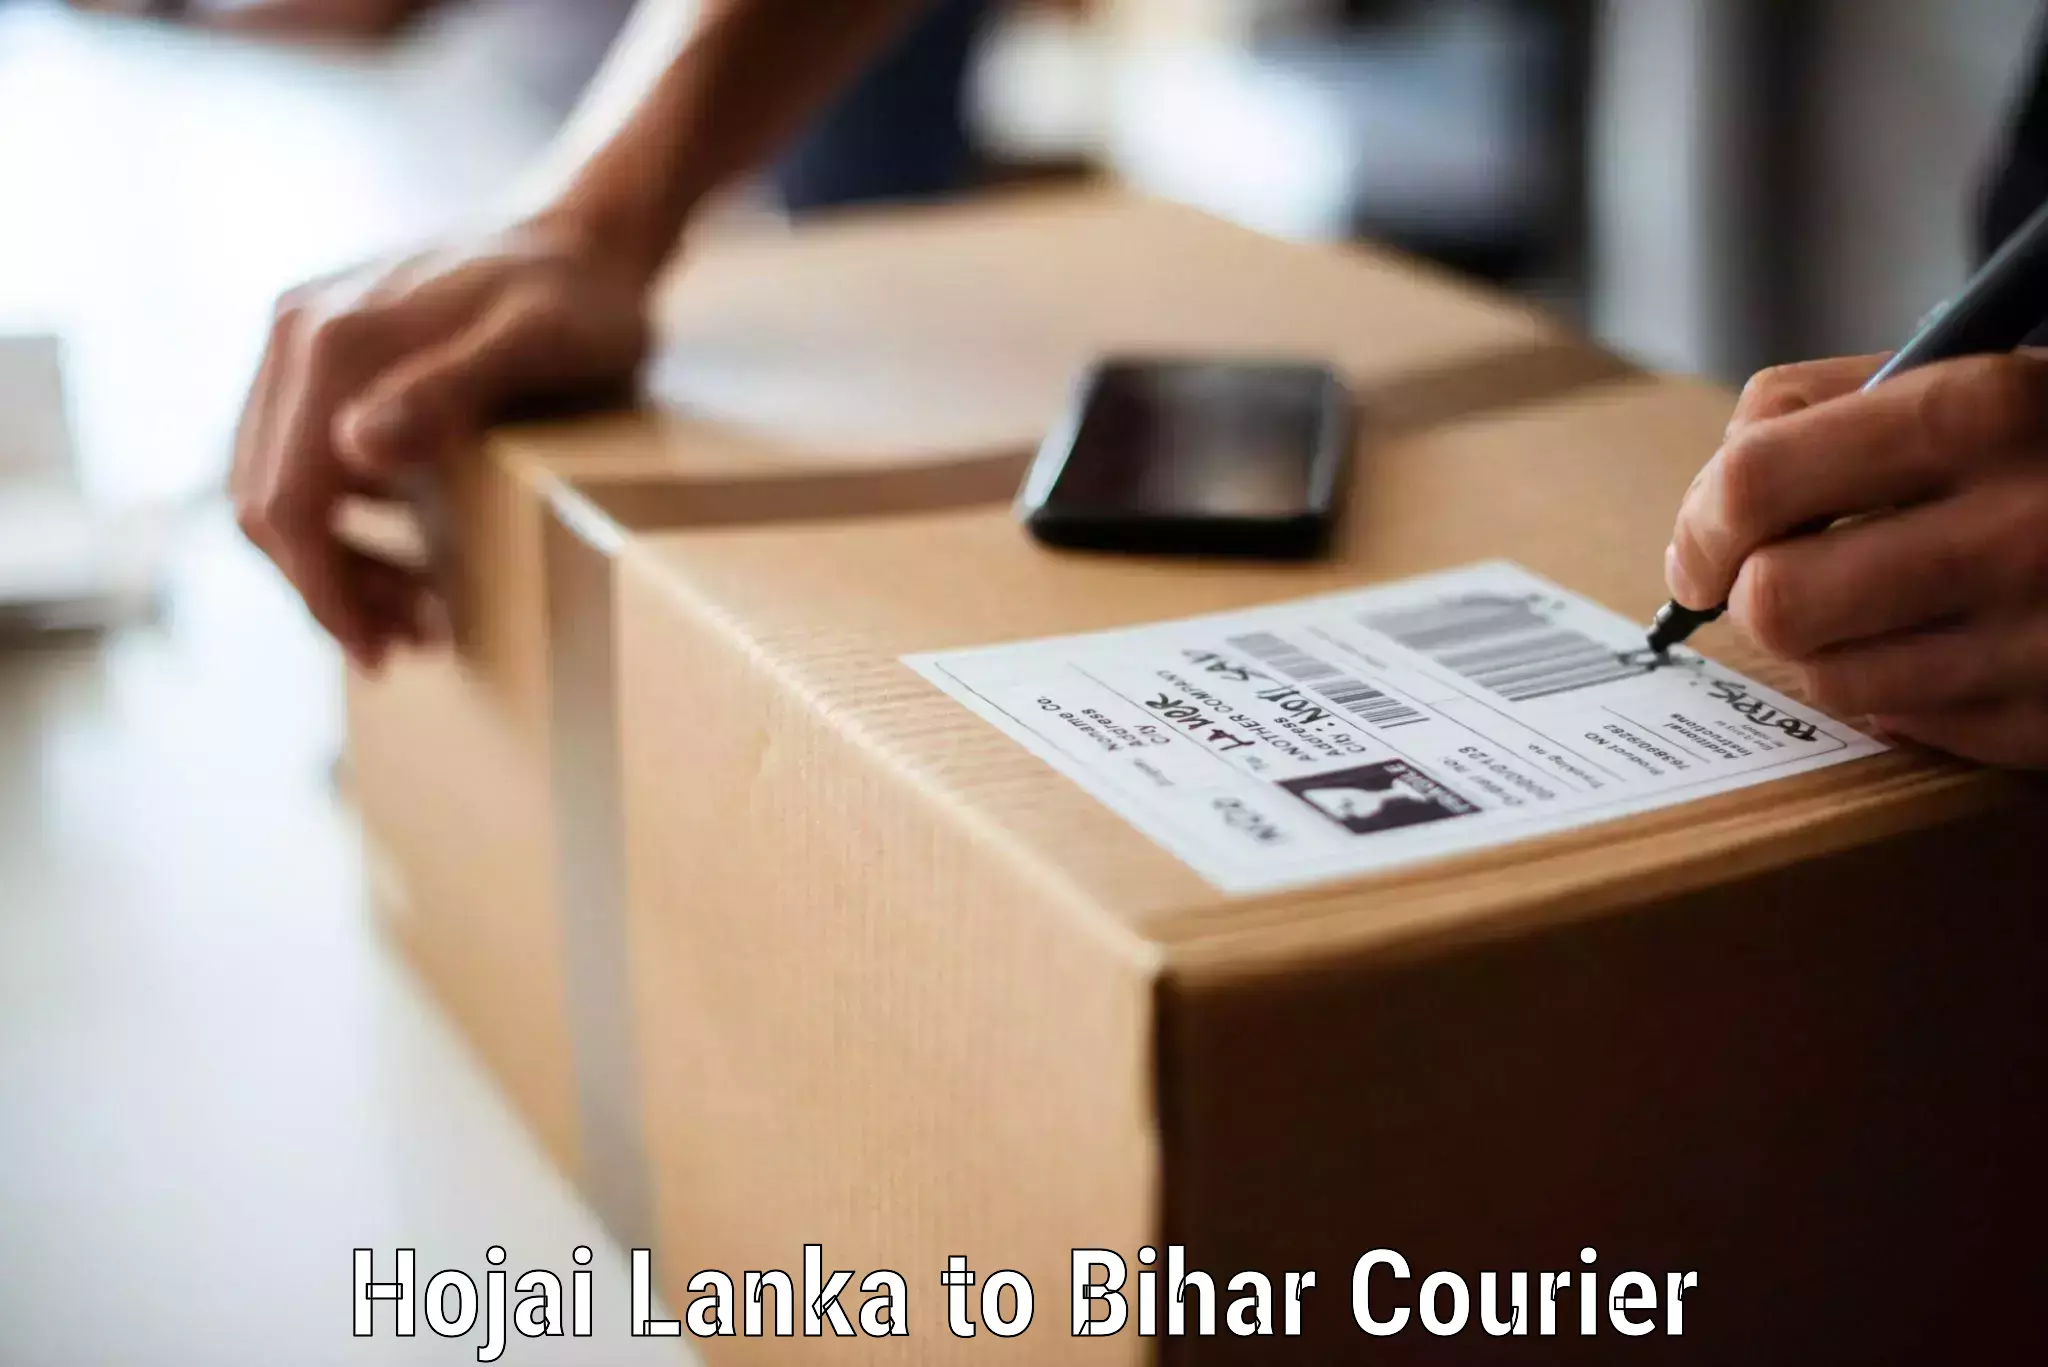 Efficient moving company Hojai Lanka to Alamnagar